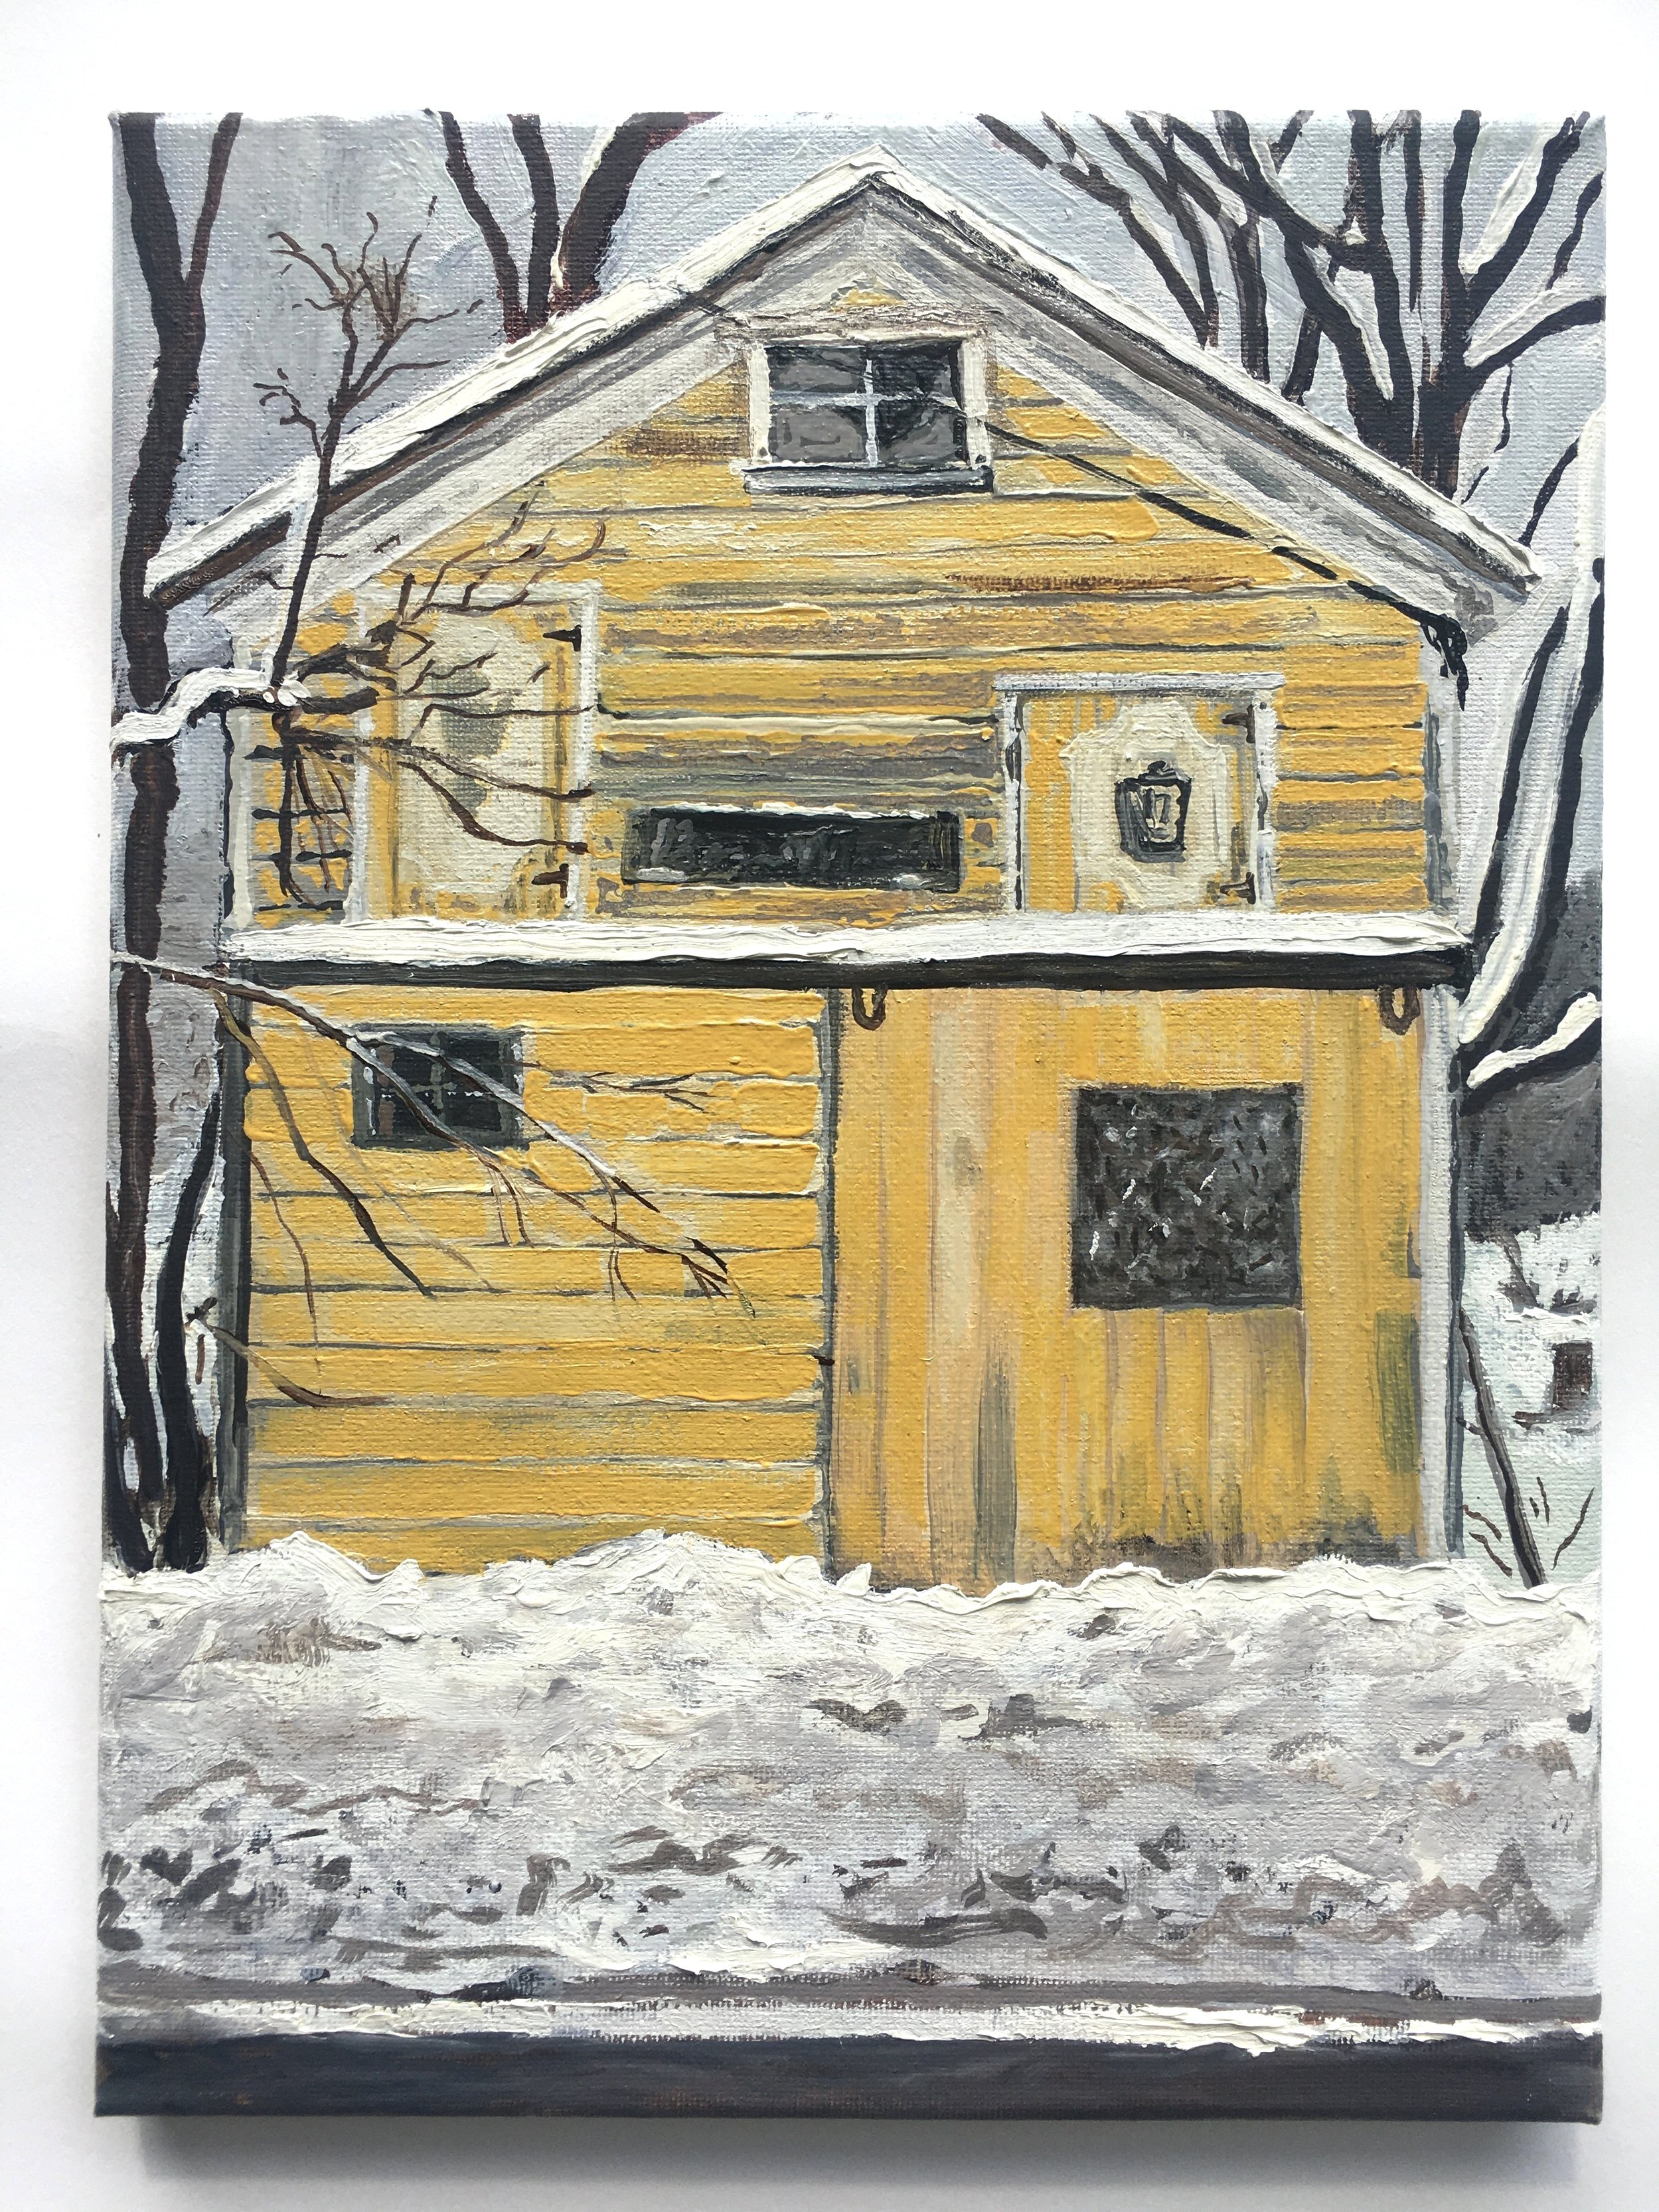   Marlene Clapper’s Old Barn,  Oil on Canvas, 12” x 9”, 2021 